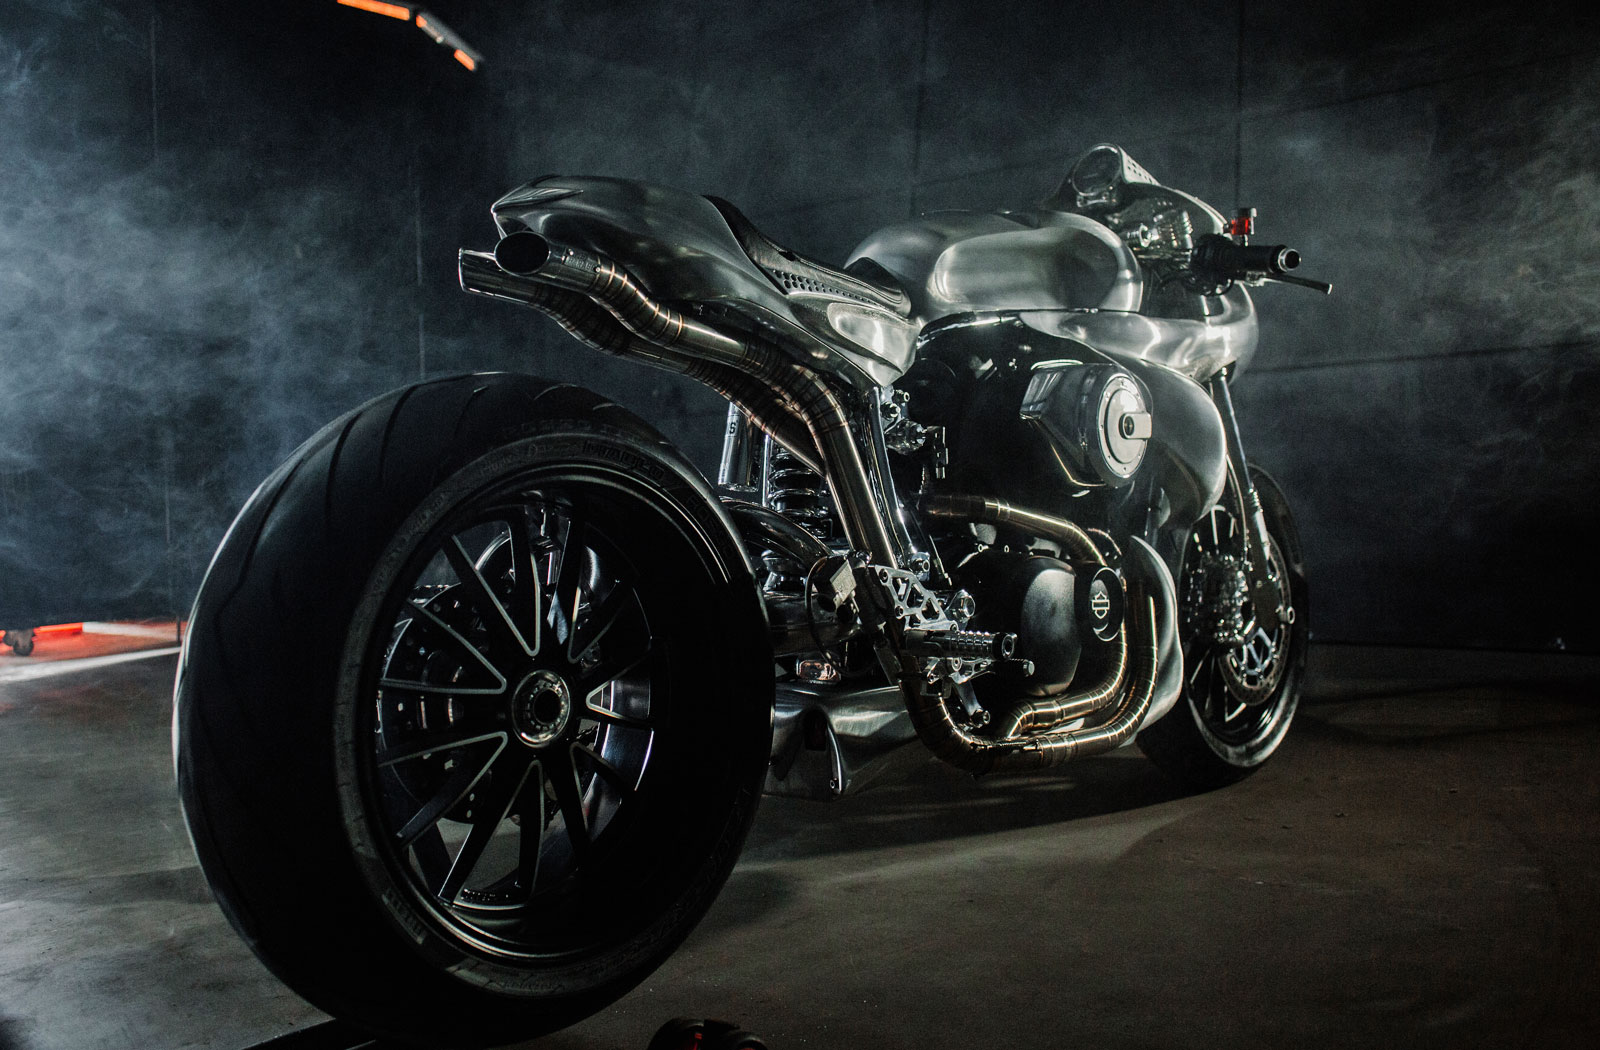 Alloy Clad Harley Davidson Street 500 Nagabanda Is The Stuff Of Nightmares Autoevolution